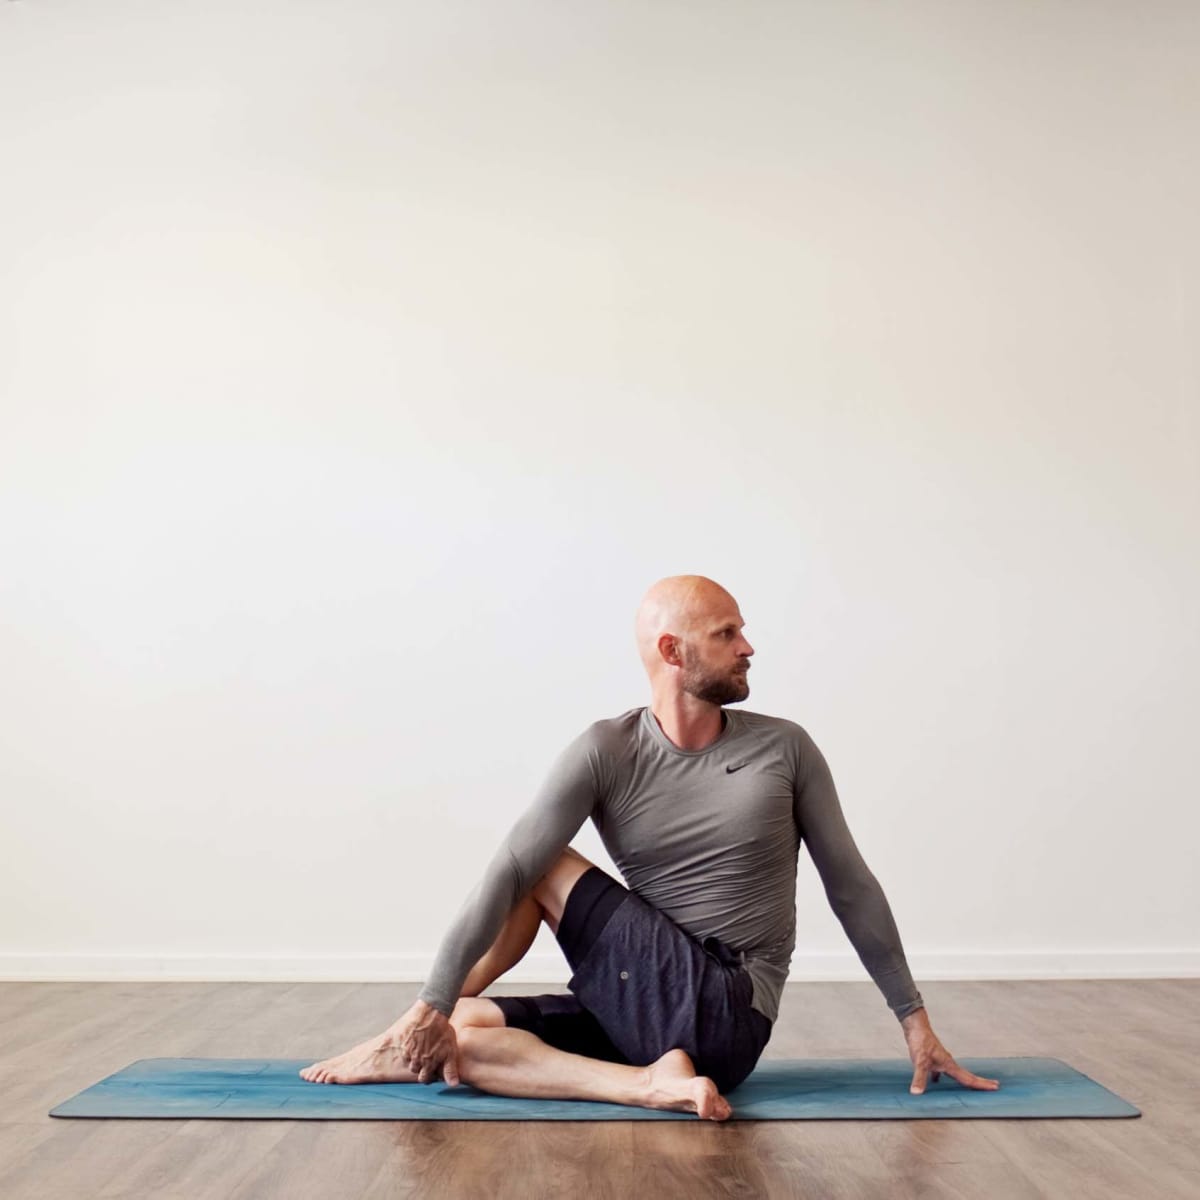 7 Yoga Poses to Heal Your Sacral Chakra - Chakra Practice